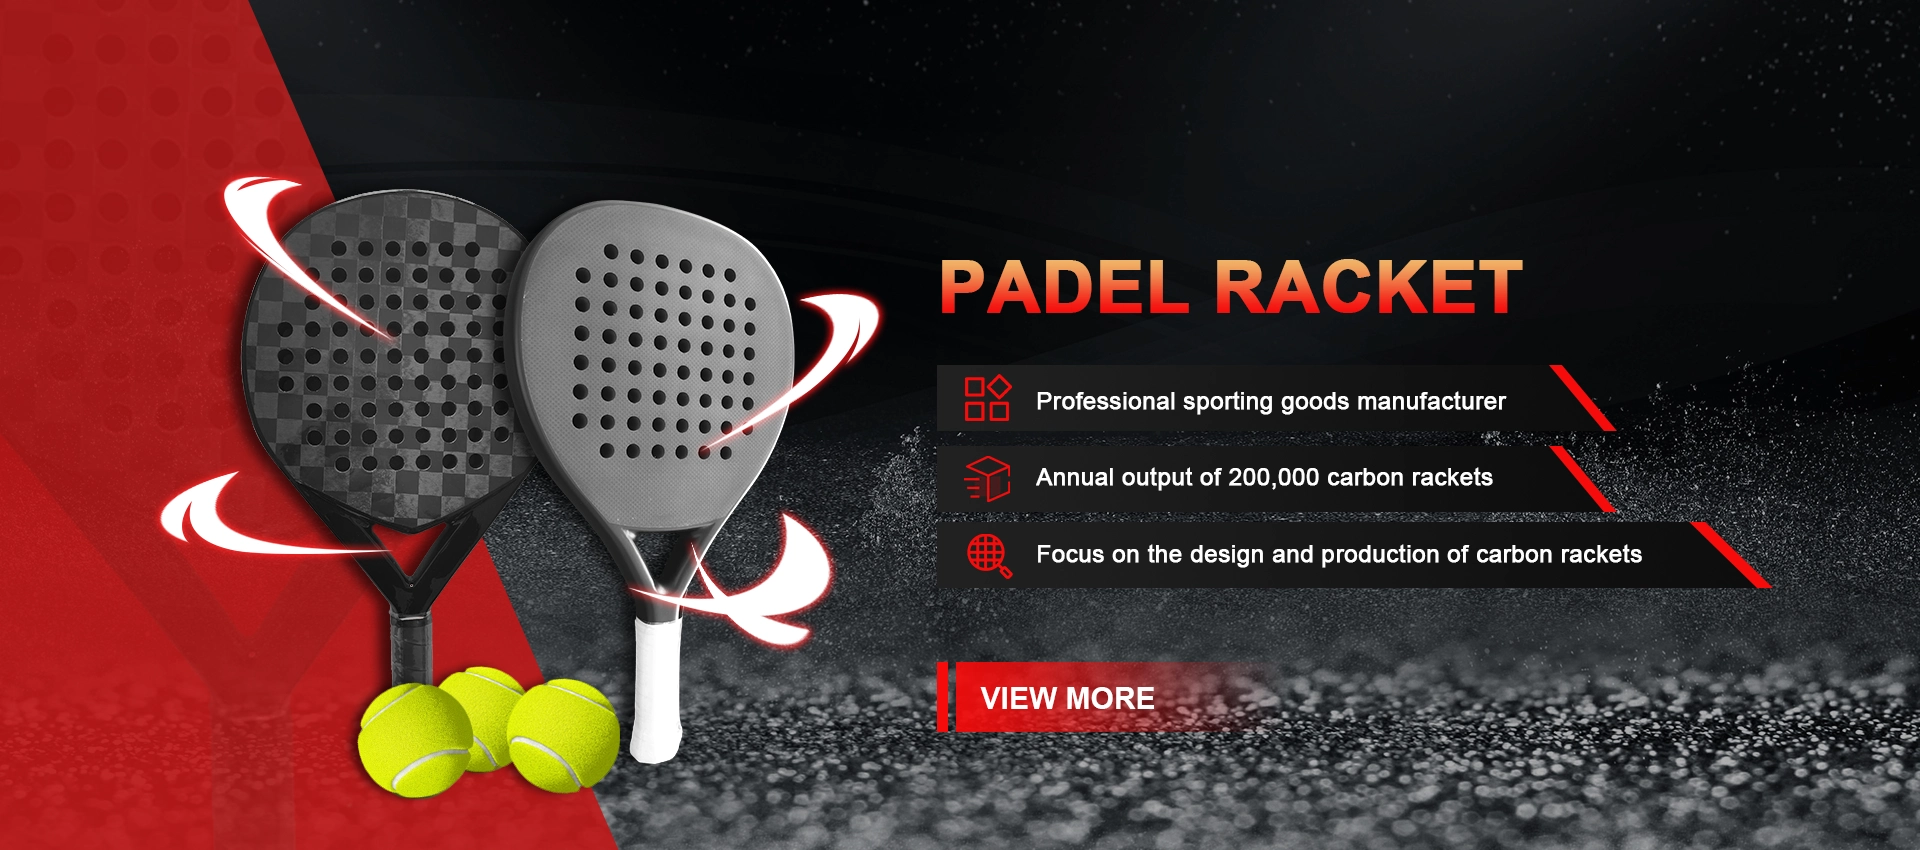 Padel Racket Manufacturers